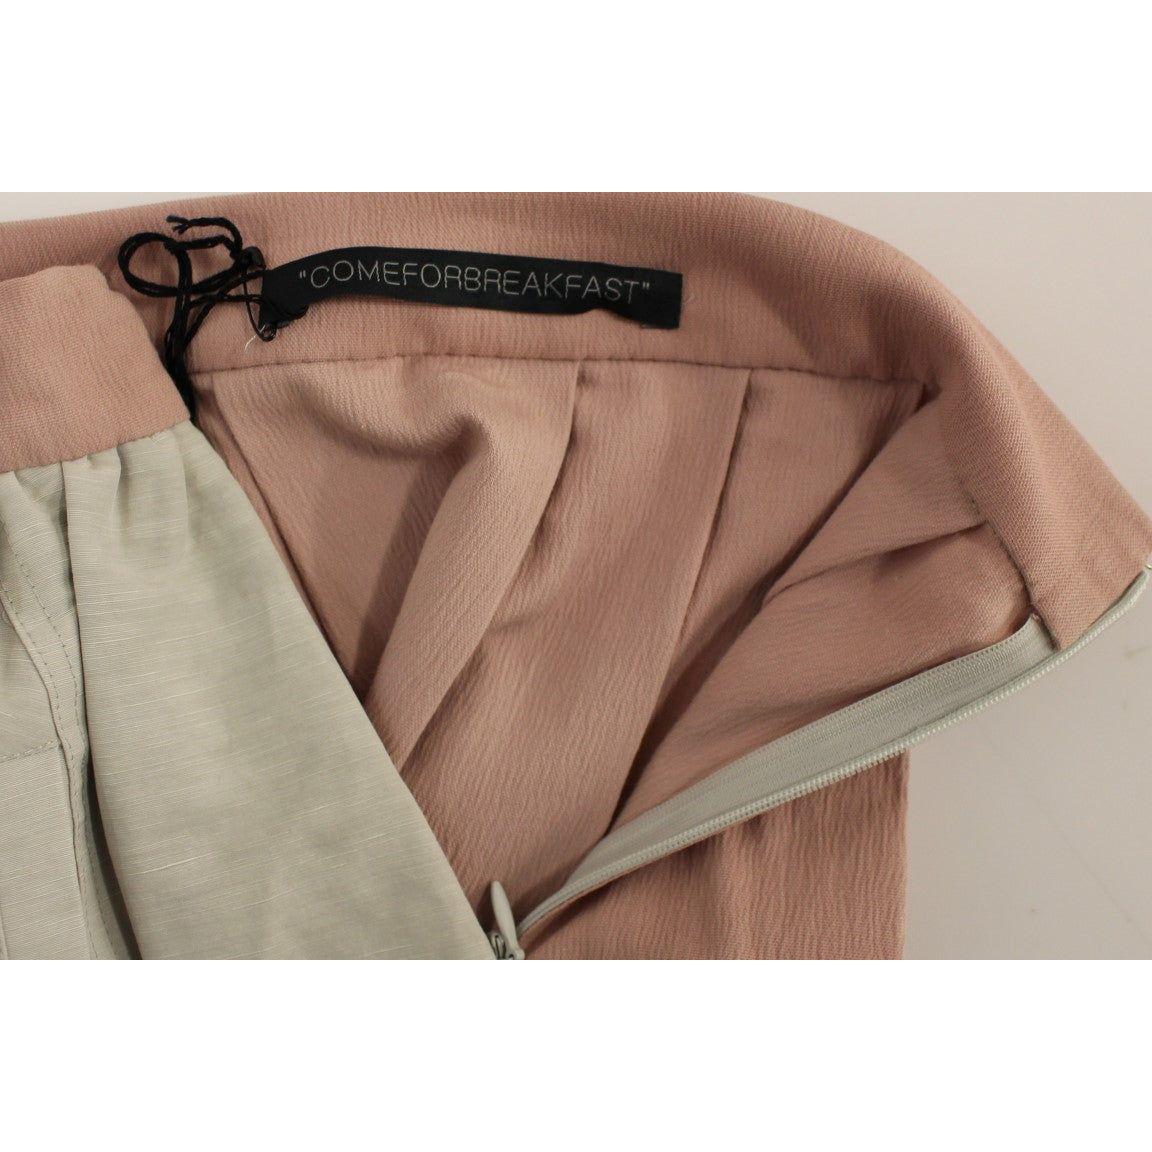 Comeforbreakfast Elegant Pleated Knee-length Skirt in Pink and Gray pink-gray-knee-length-pleated-skirt 219749-pink-gray-knee-length-pleated-skirt-4.jpg